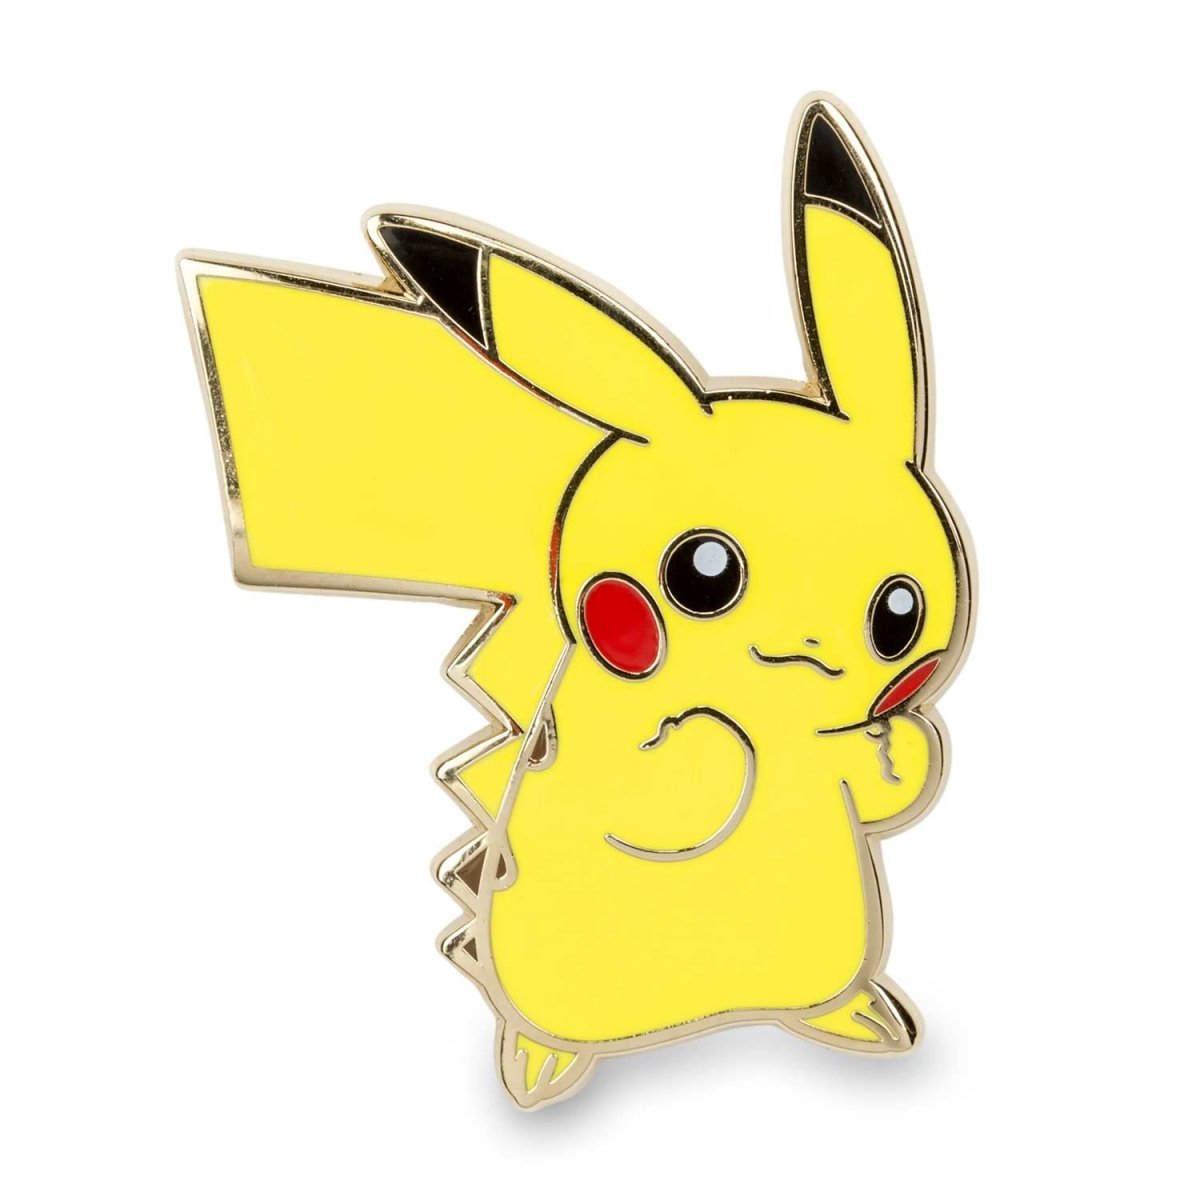 Pikachu pins